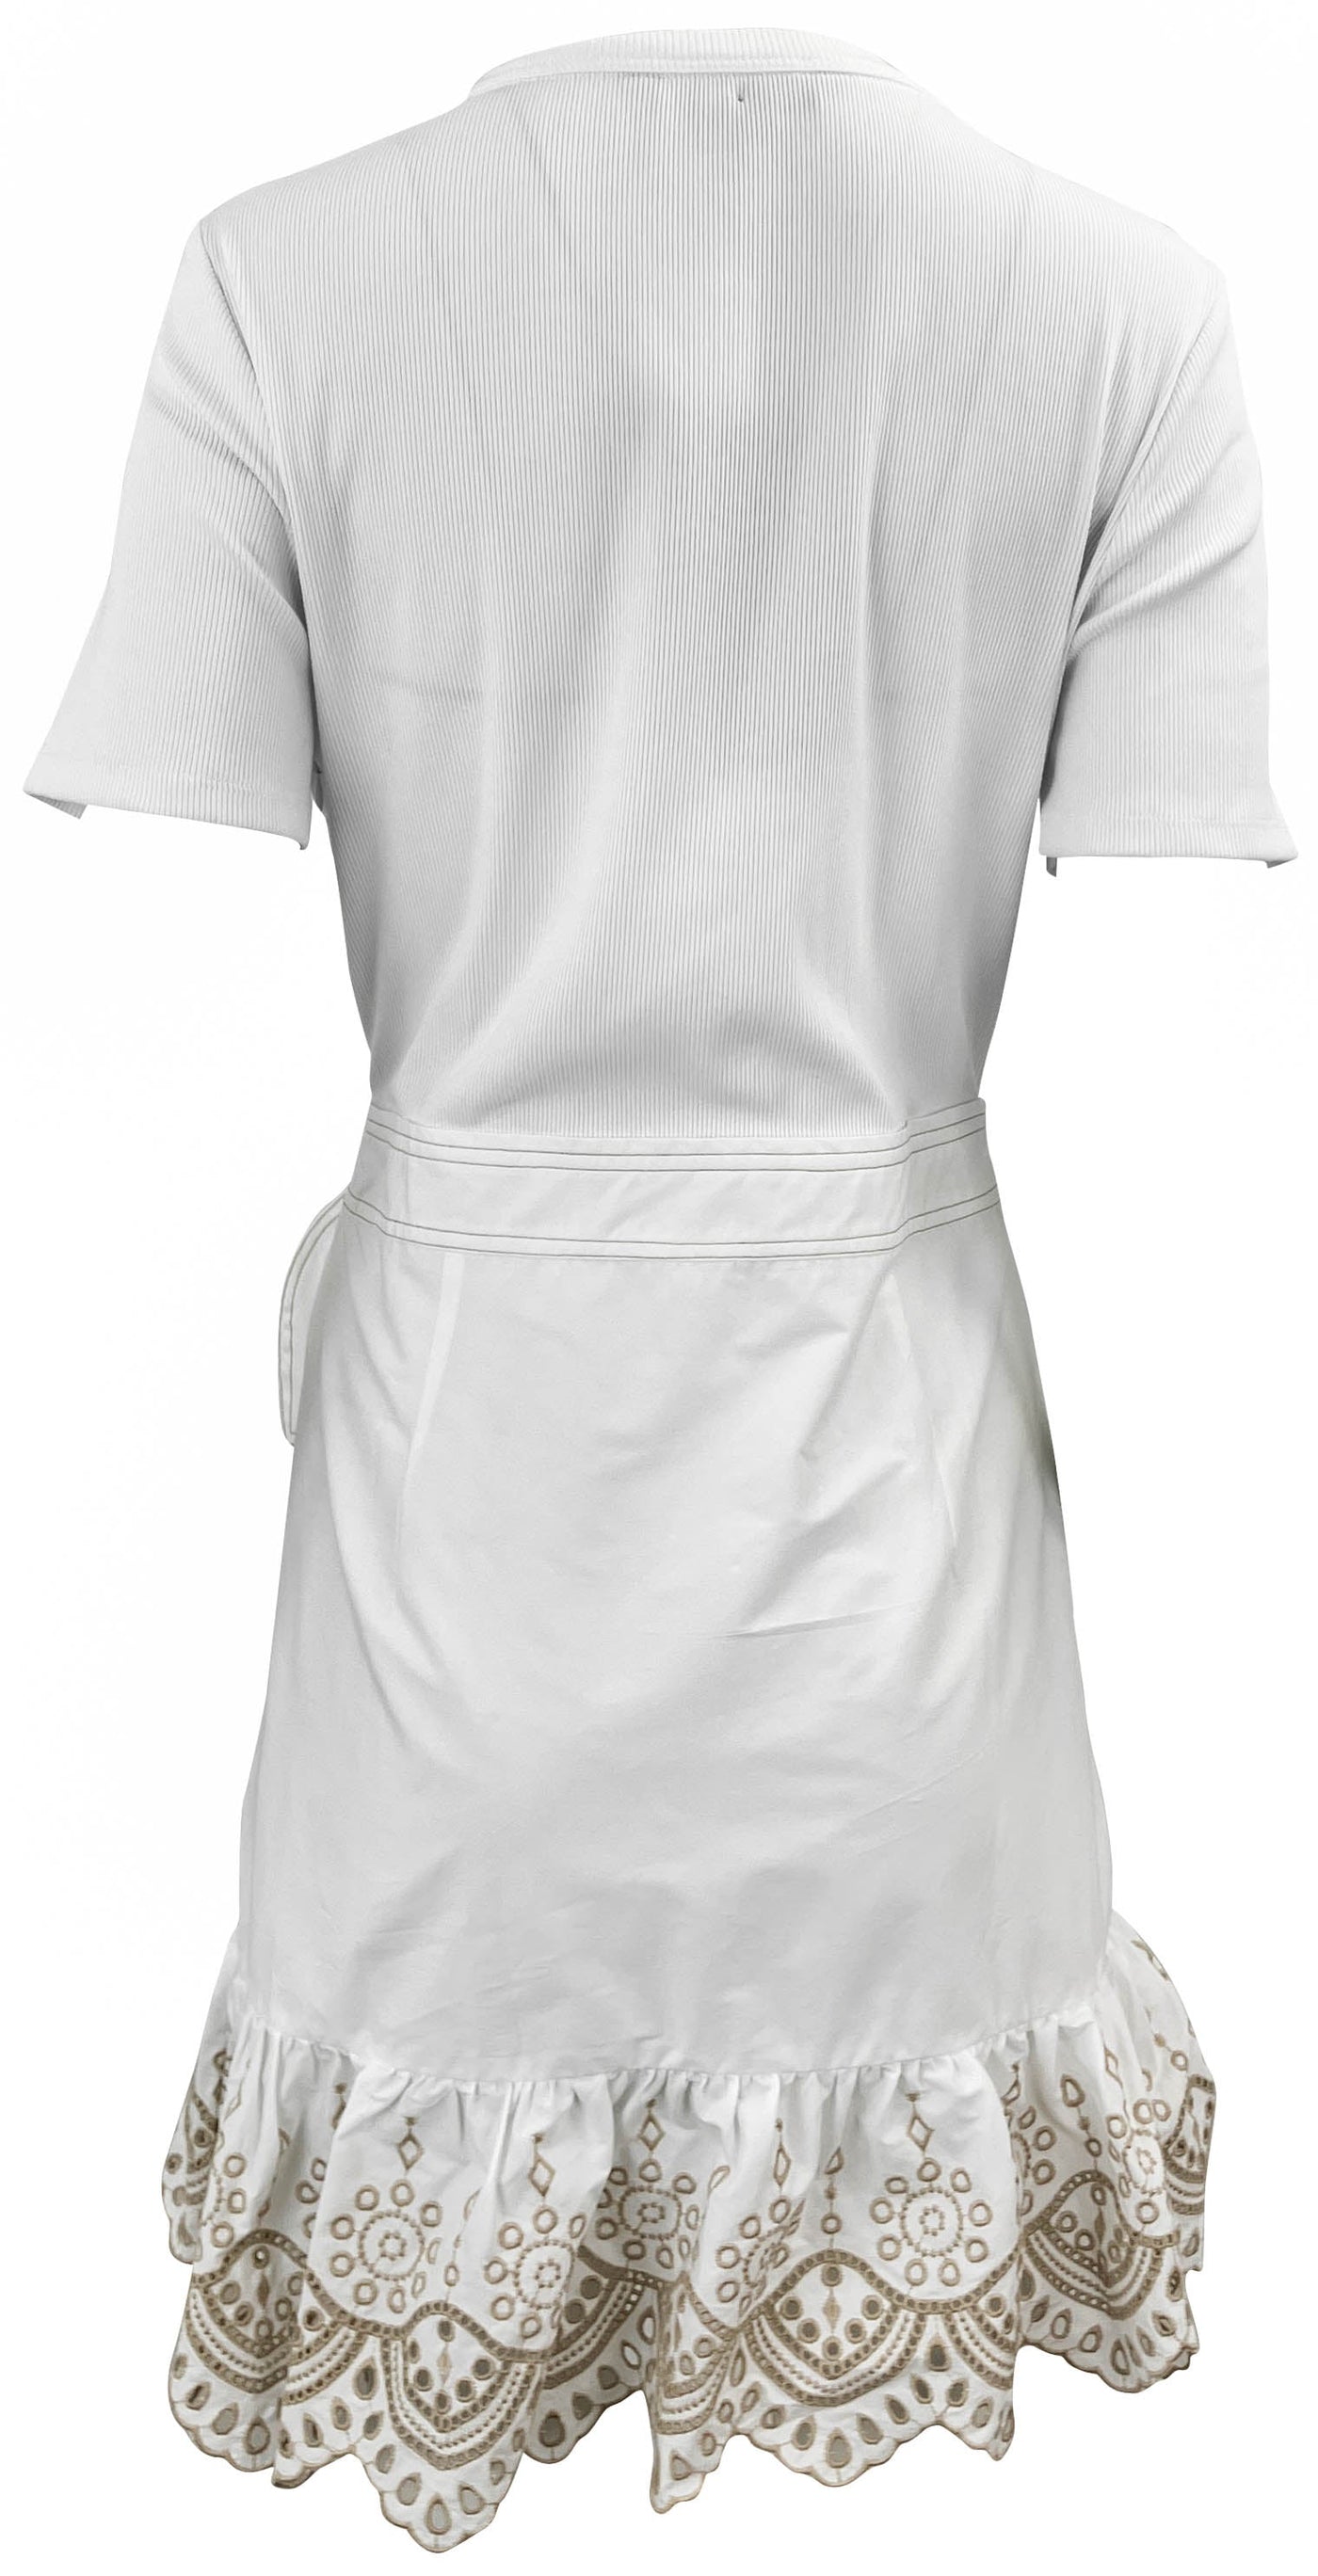 Veronica Beard Gradie Dress in White/Light Pebble - Discounts on Veronica Beard at UAL